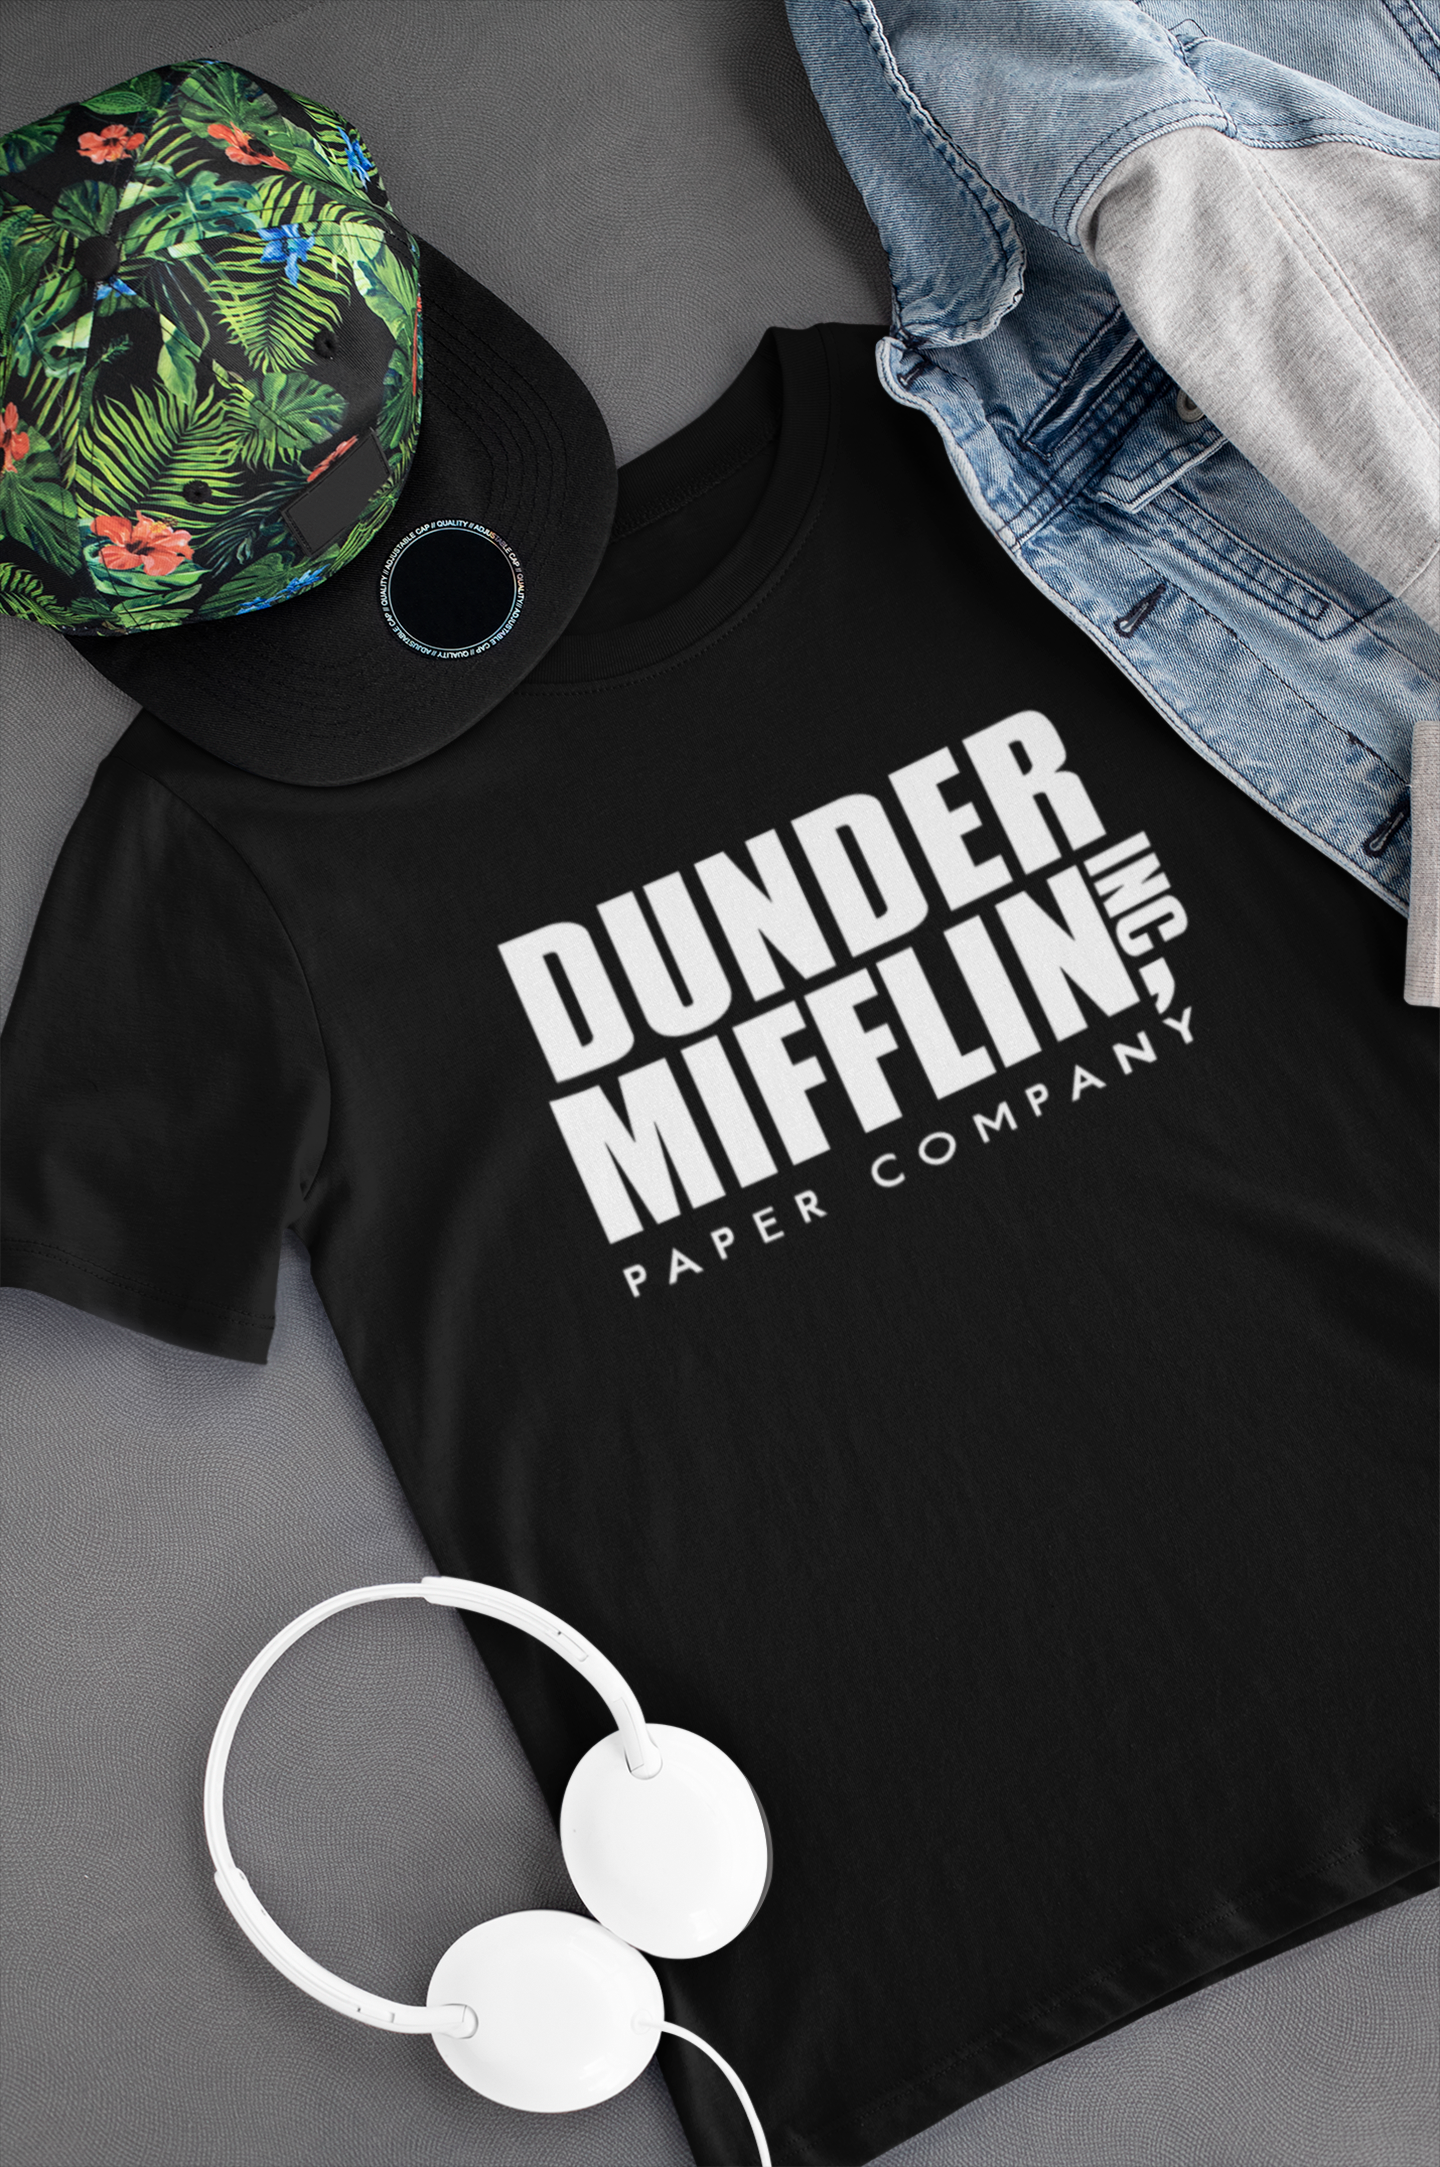 Camiseta "Dunder Mifflin" - The Office - Séries de TV